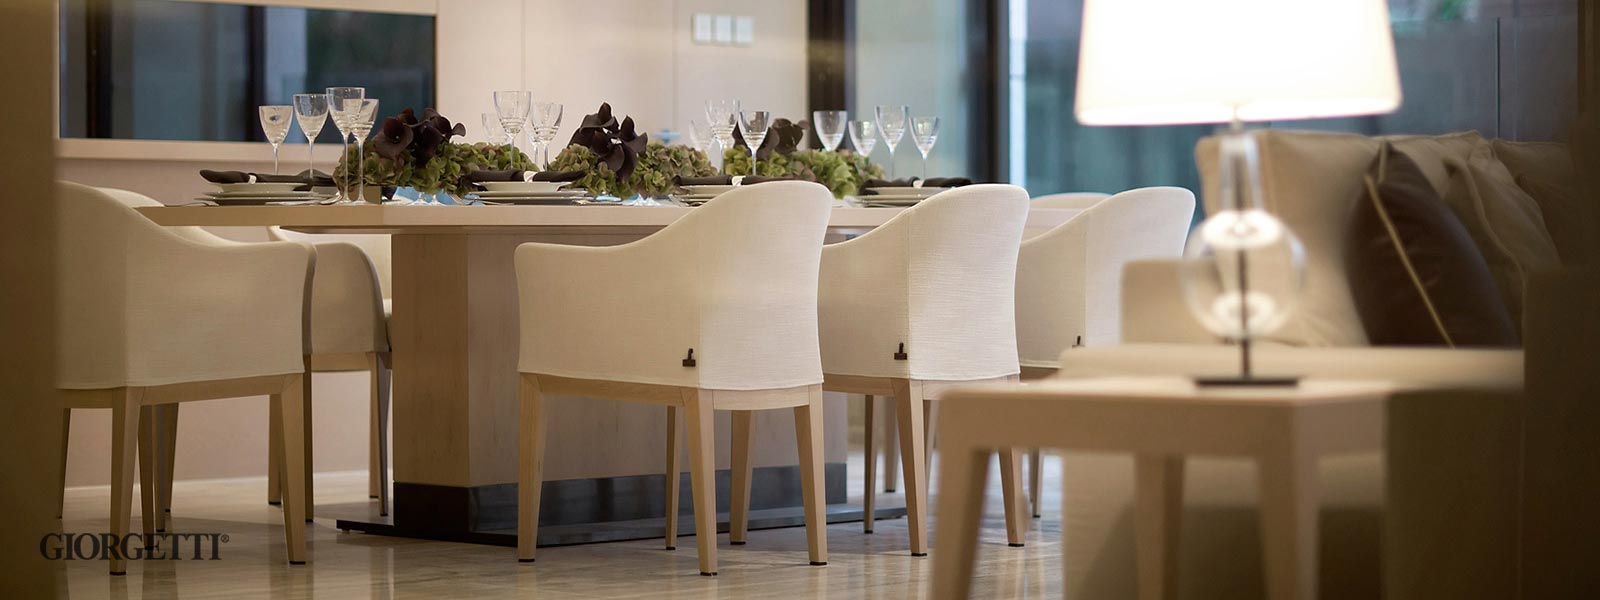 Giorgetti modern Italian table